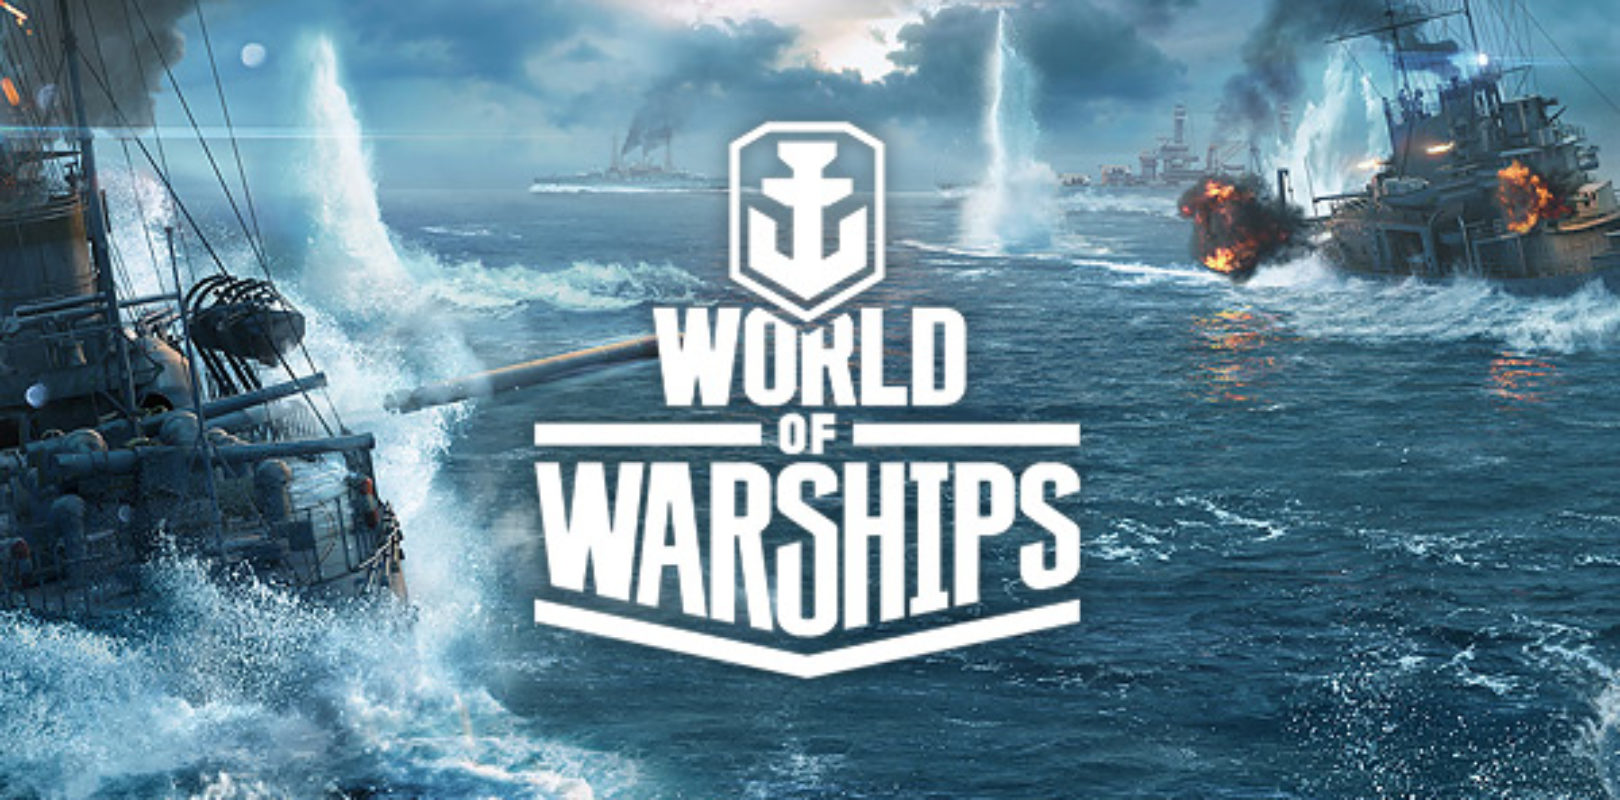 world of warships free codes 2021